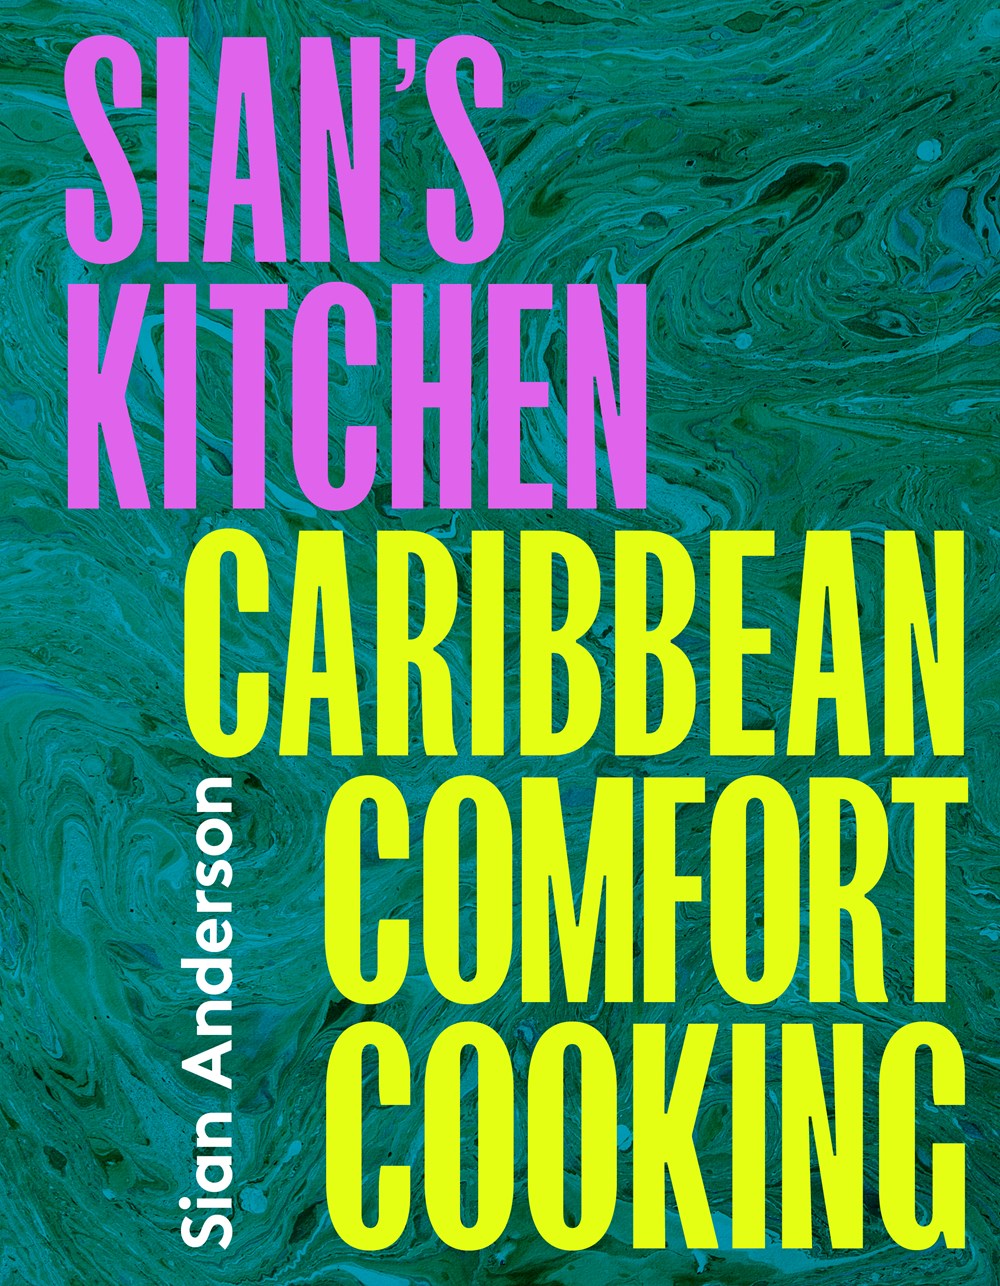 Sian’s Kitchen: Caribbean Comfort Cooking